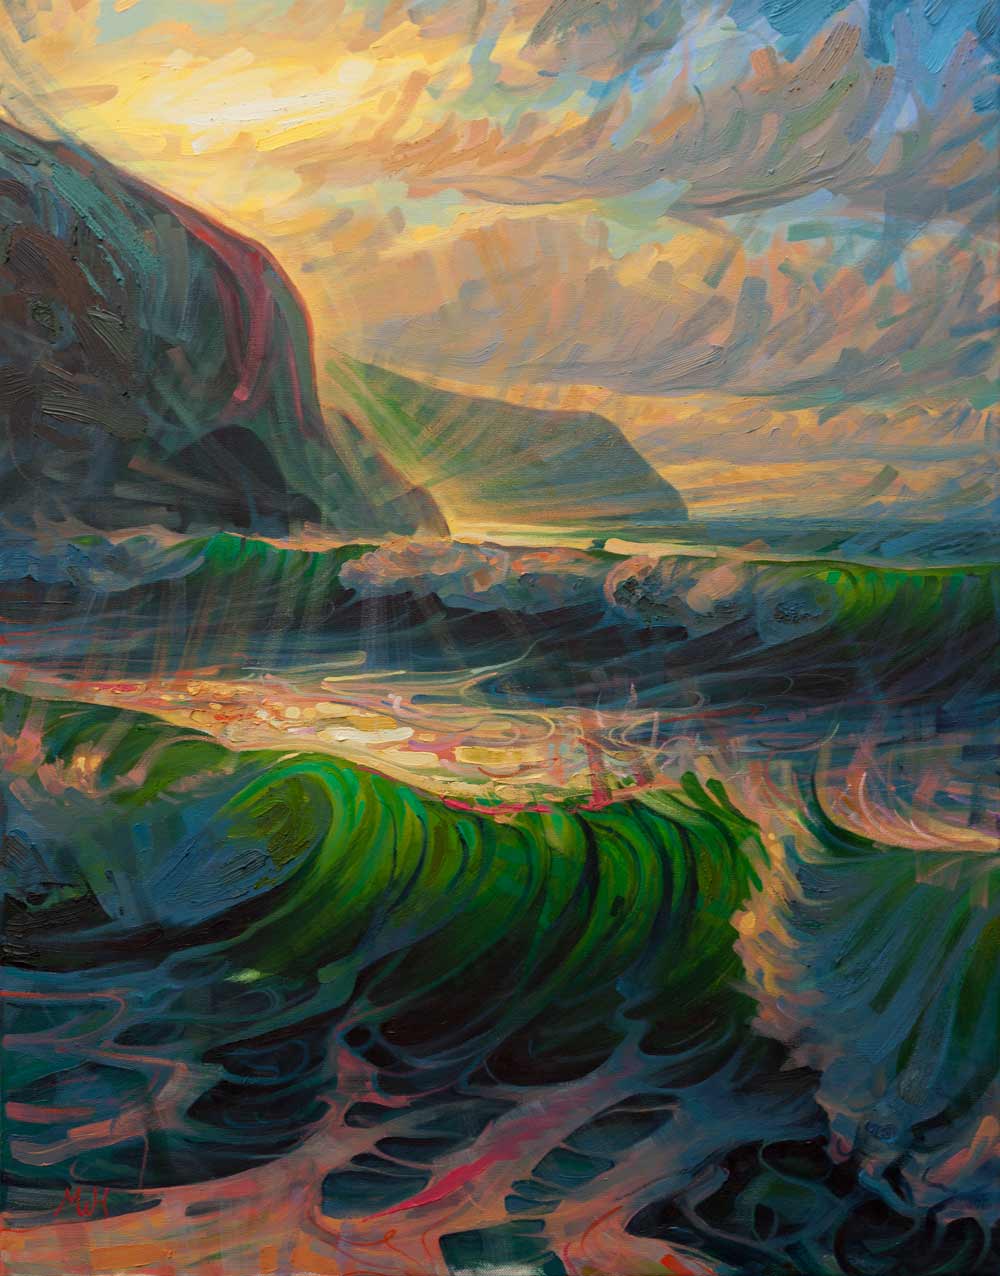 Dramatic seascape of crashing waves under cliffs at sunset.